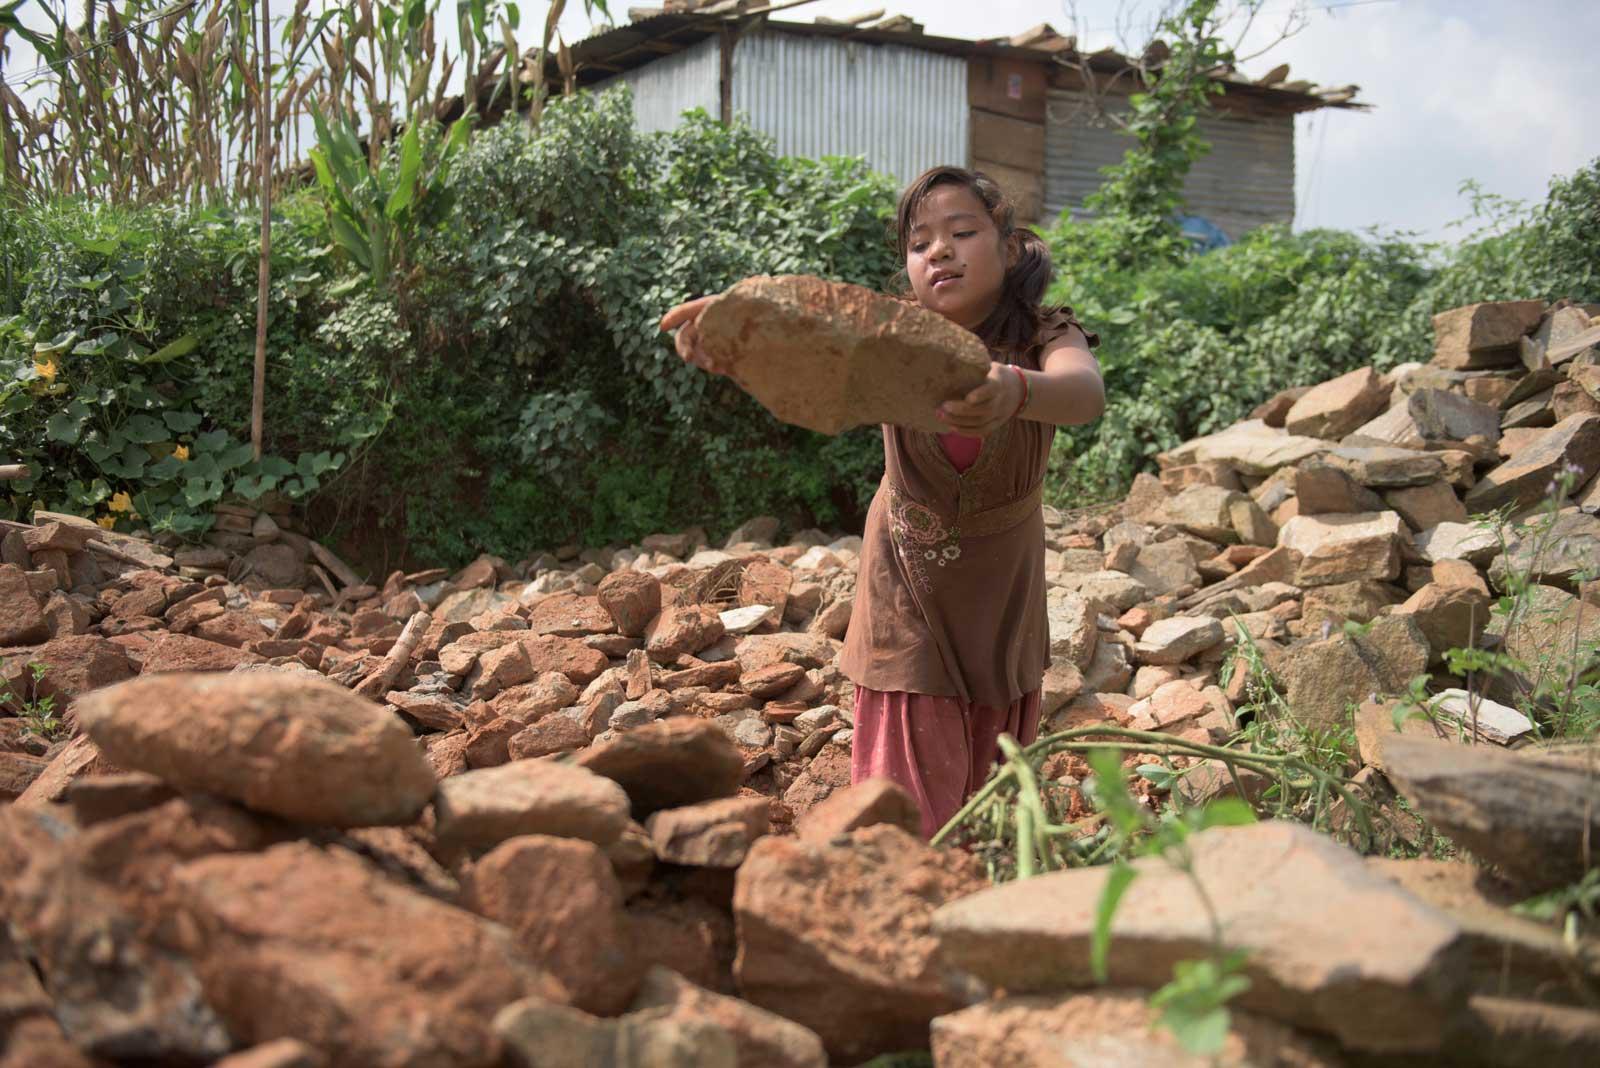 phulmaya cleaning up after earthquake, lifting stones